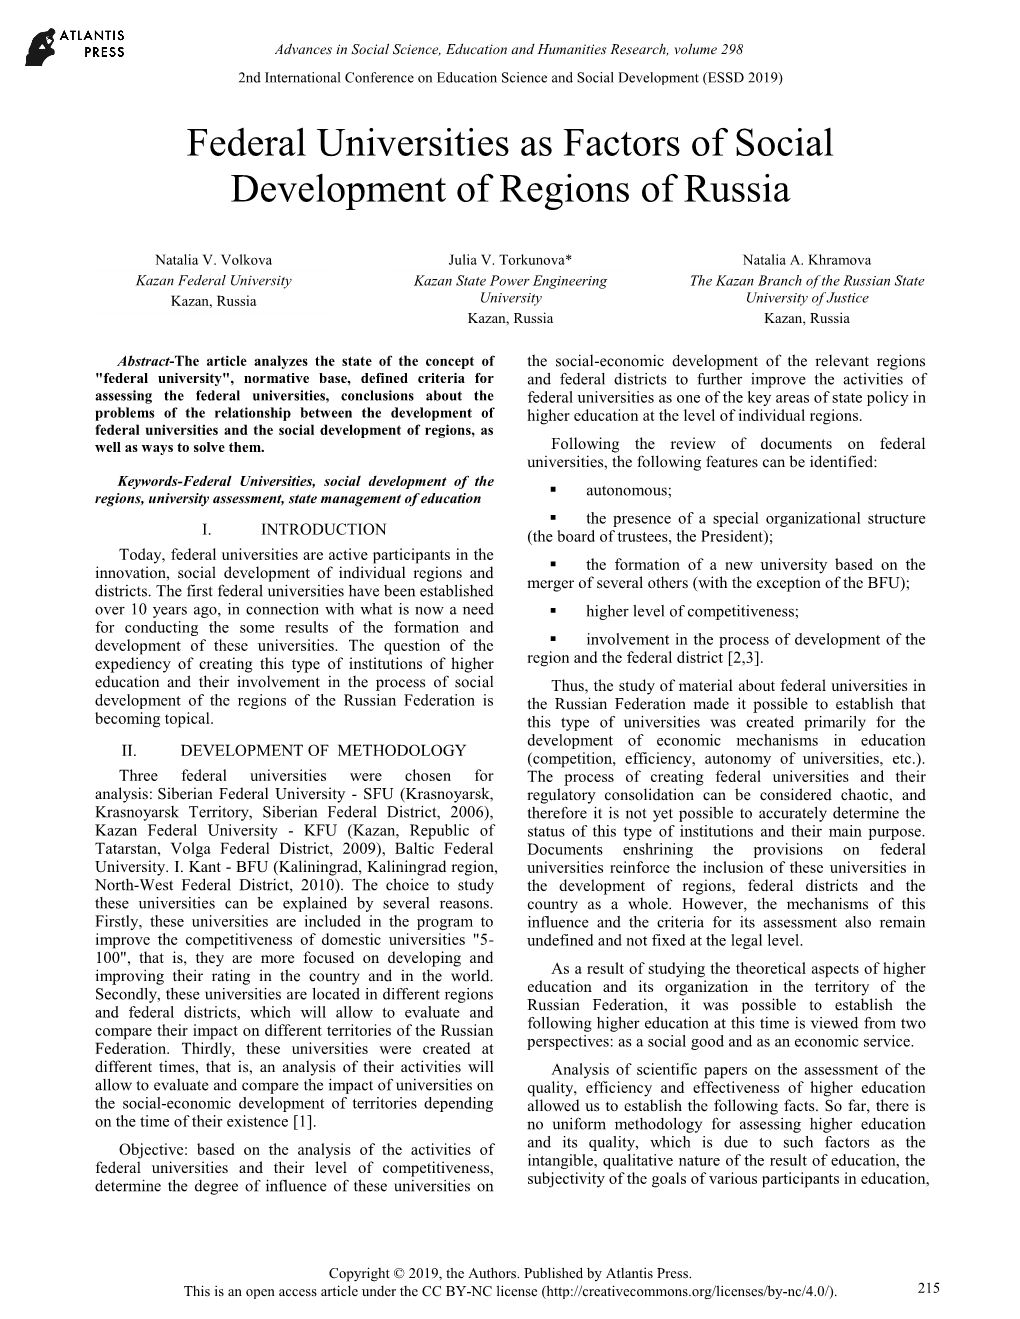 Federal Universities As Factors of Social Development of Regions of Russia